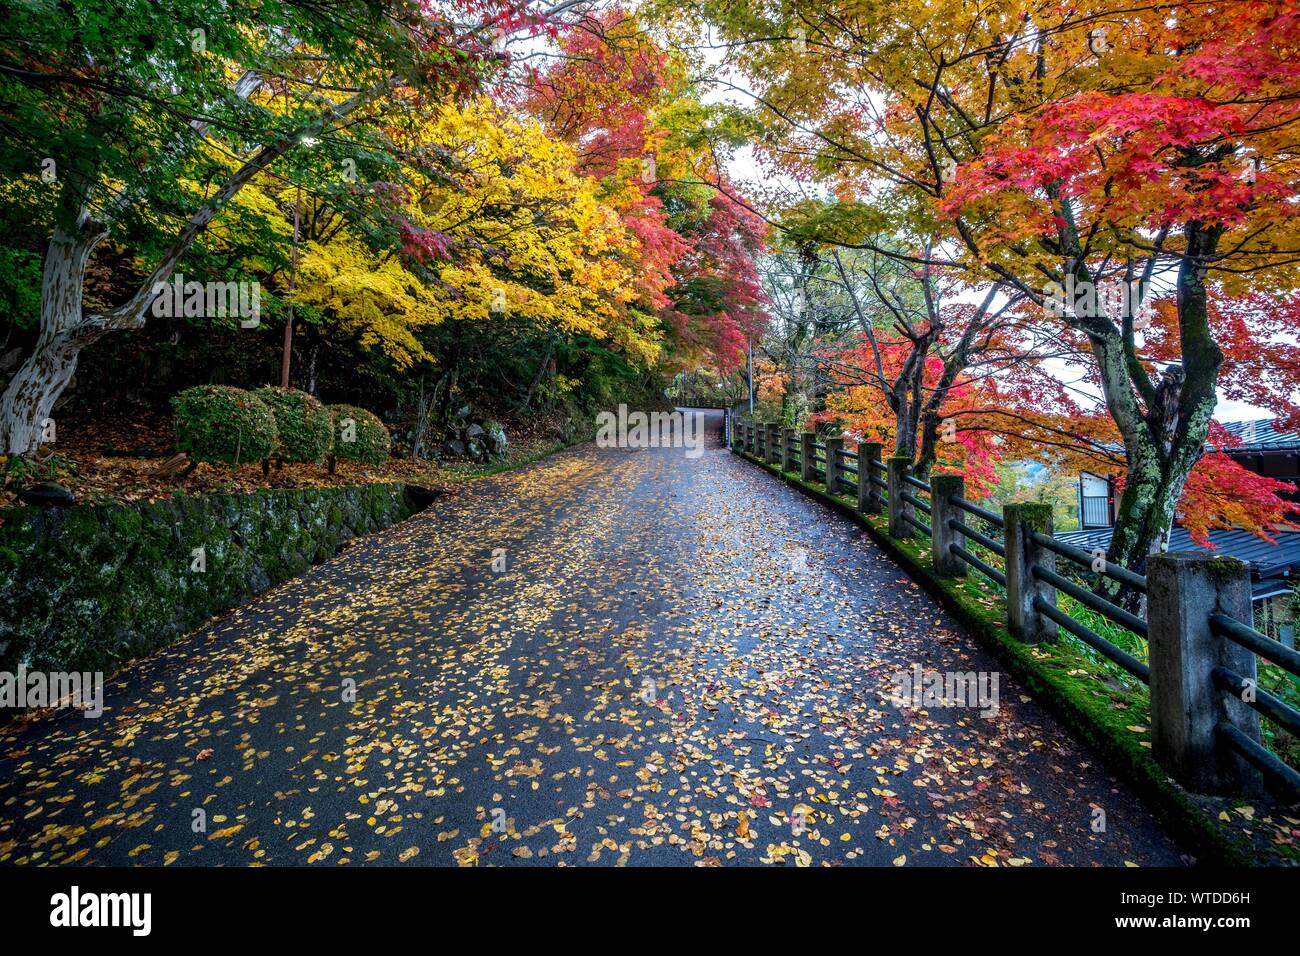 Autumn-colored trees and autumn leaves on the street, Takayama, Japan Stock Photo